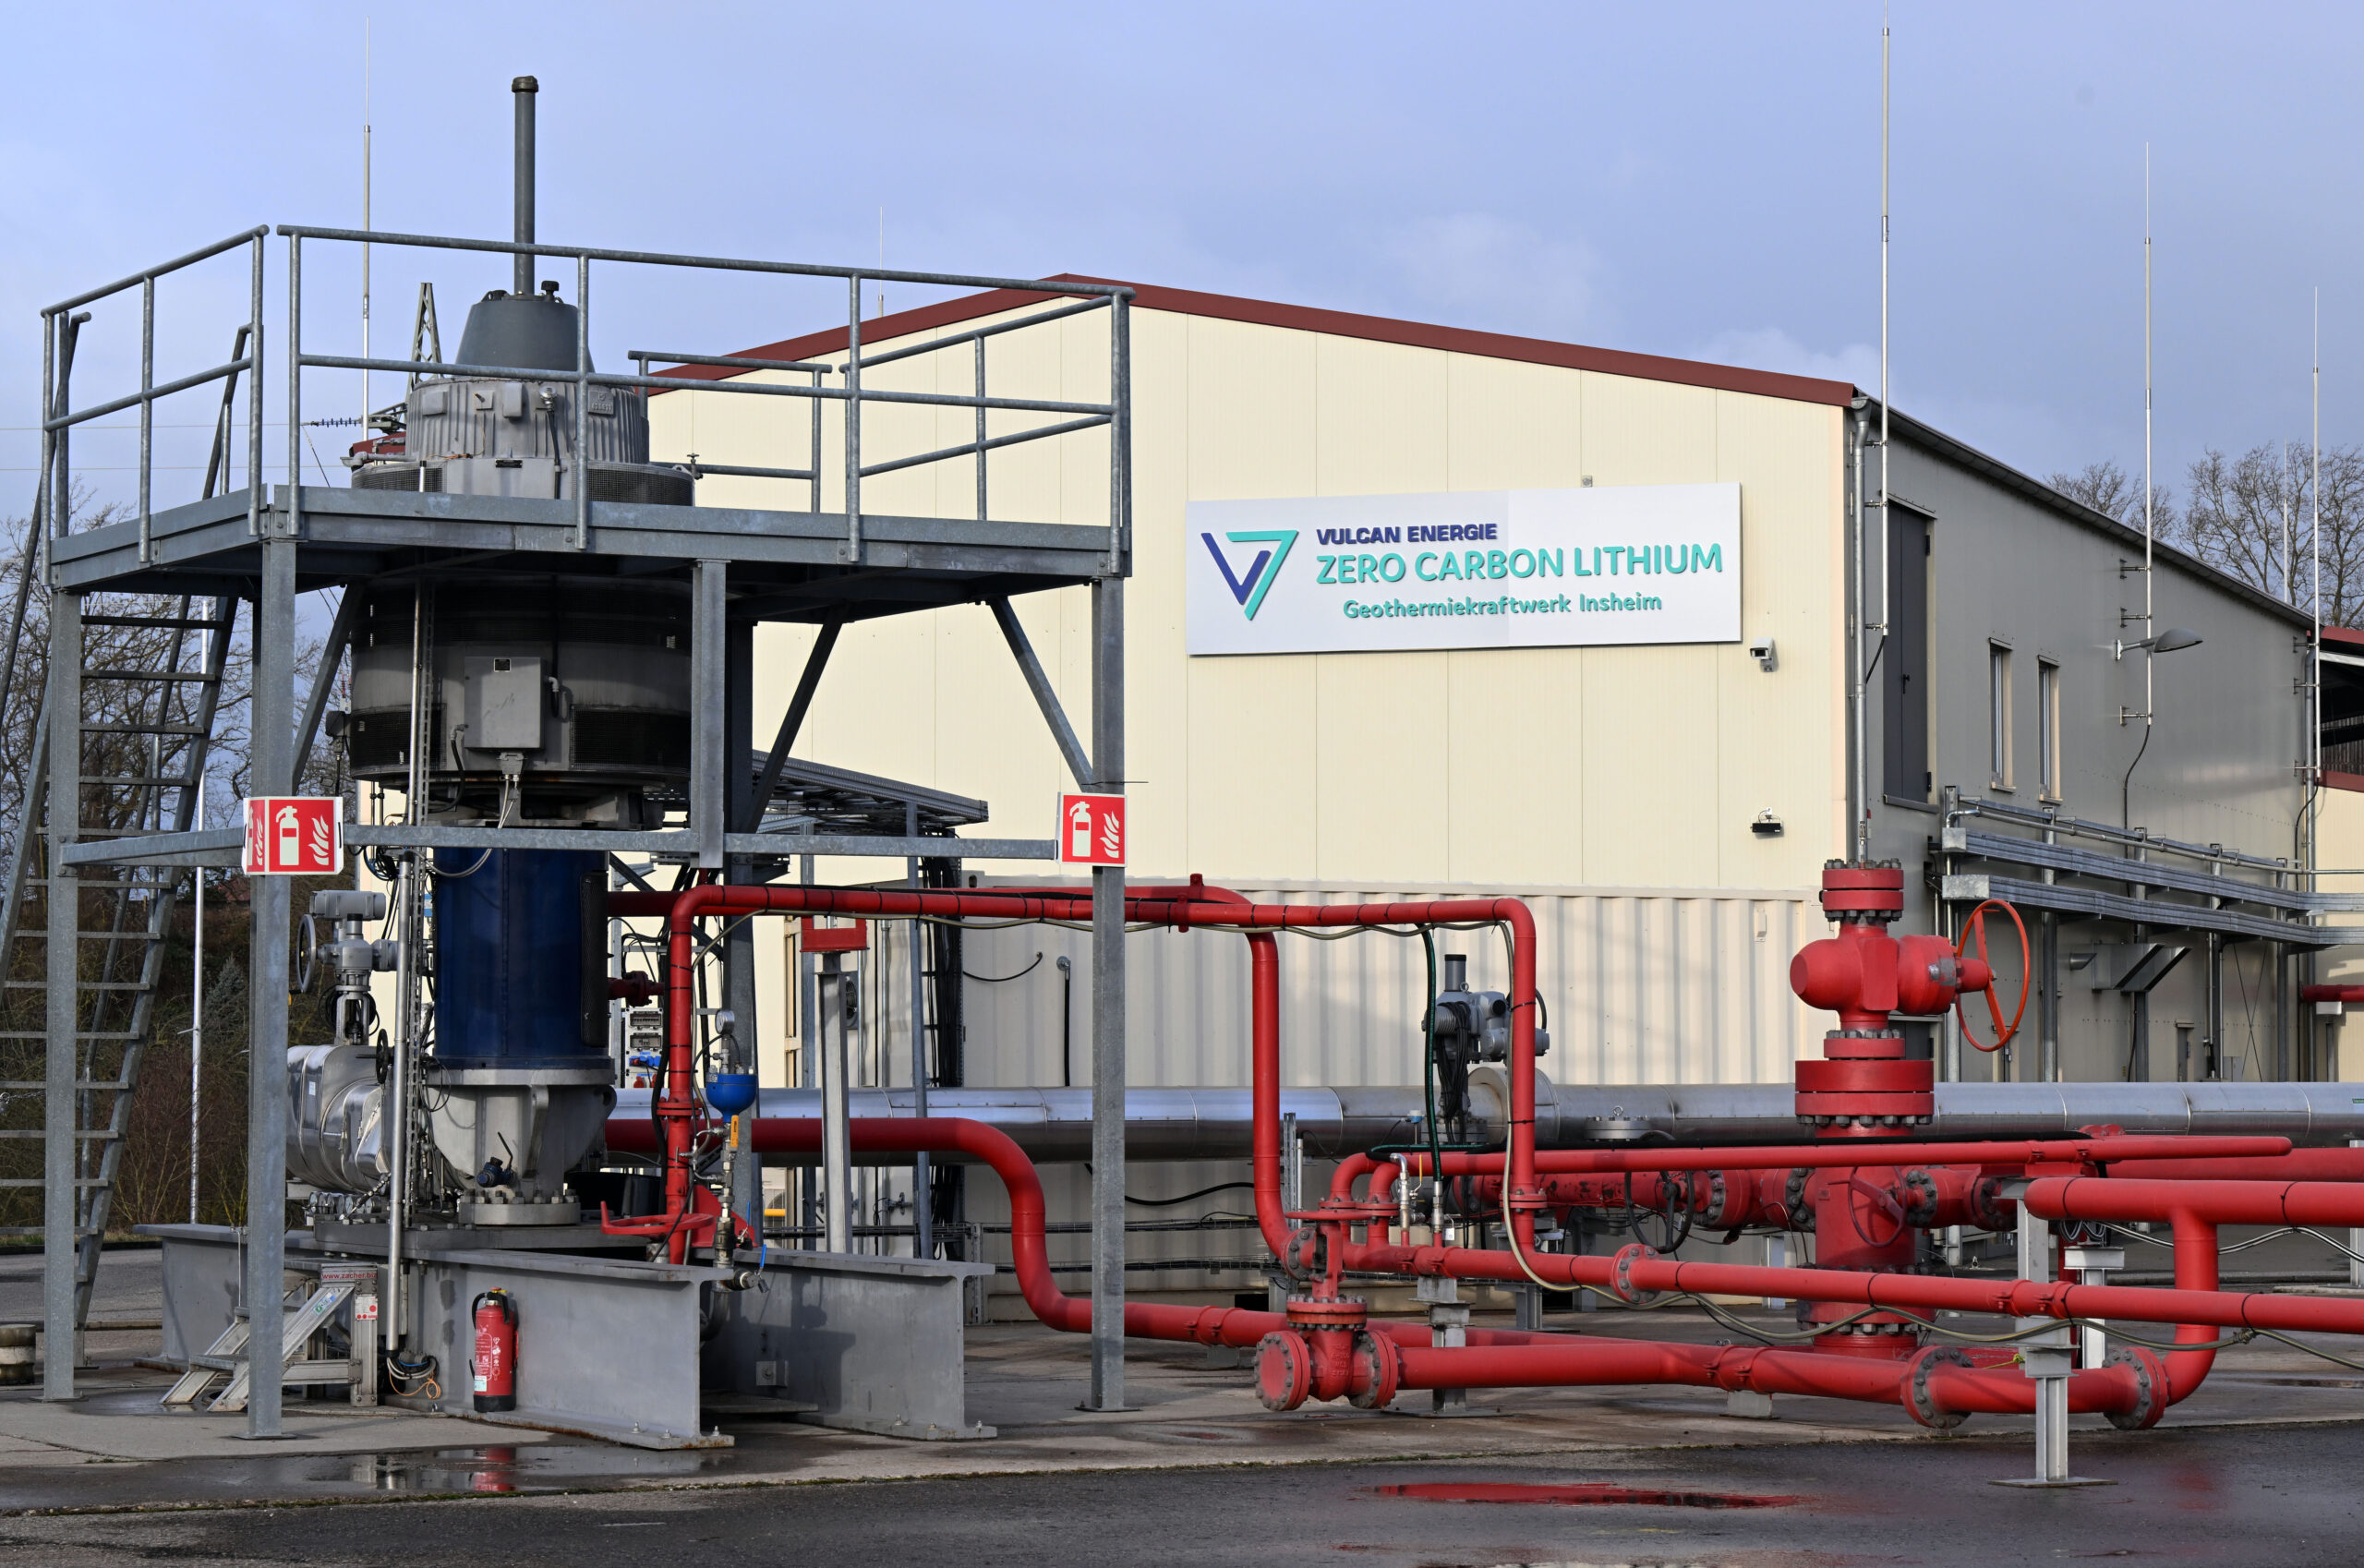 geothermal power plant Insheim